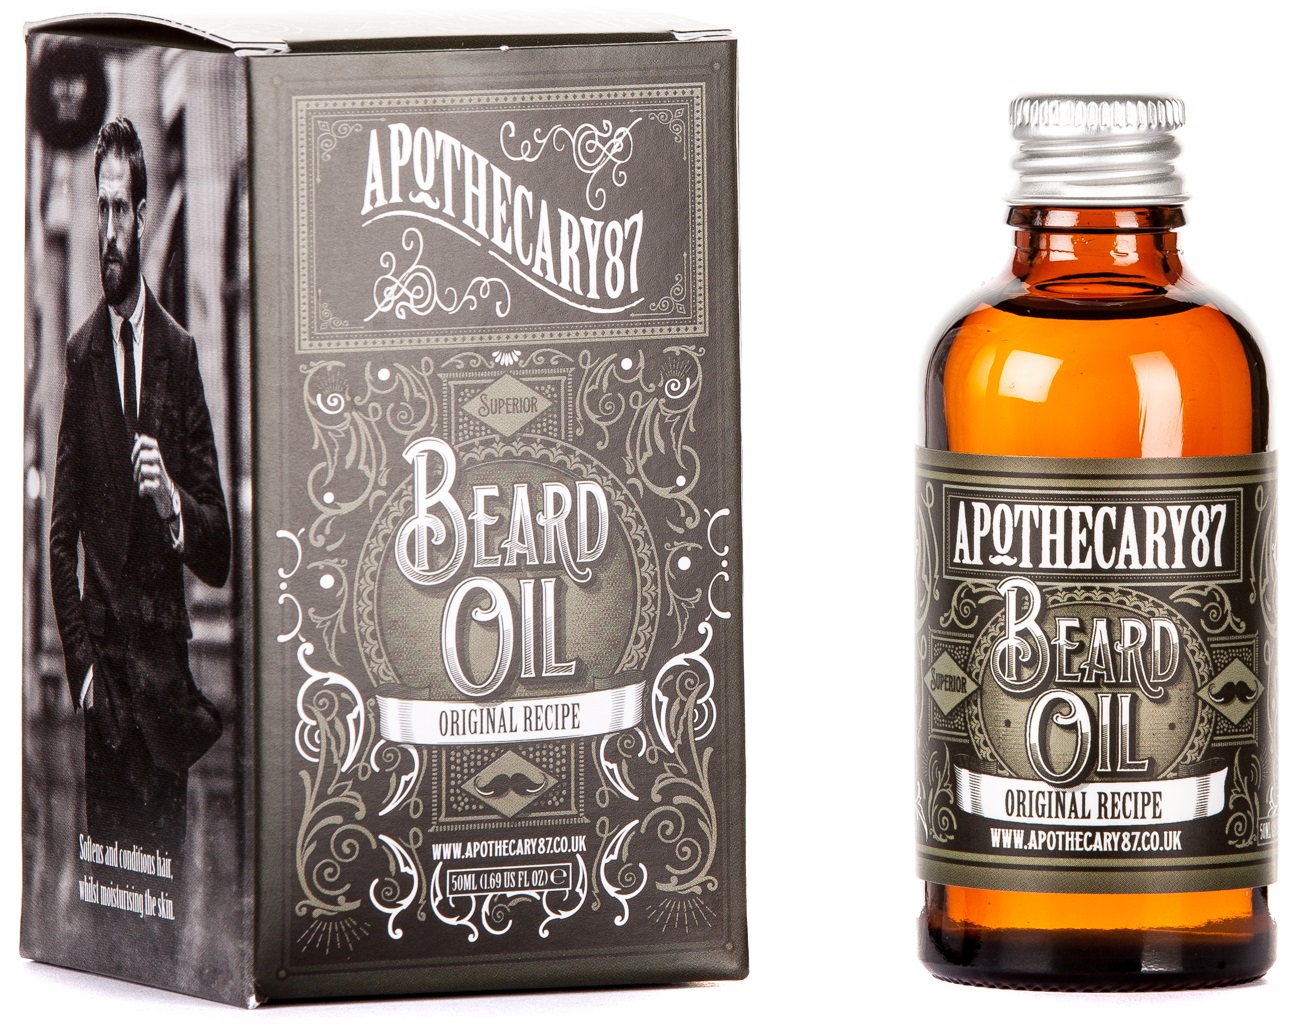 Apothecary 87 Original Recipe Beard Oil 50ml